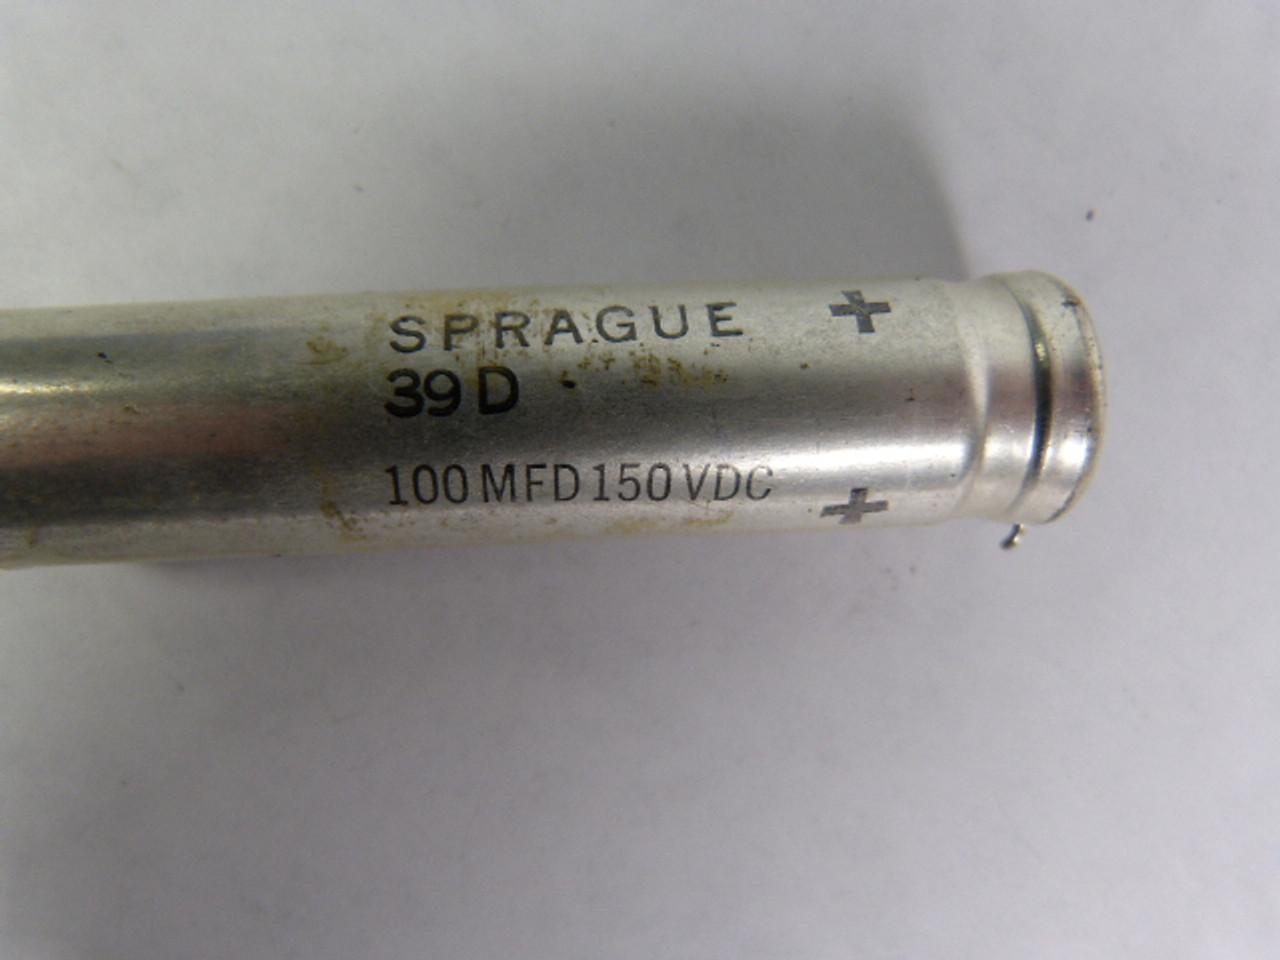 Sprague 39D Capacitor 100mfd 150VDC USED